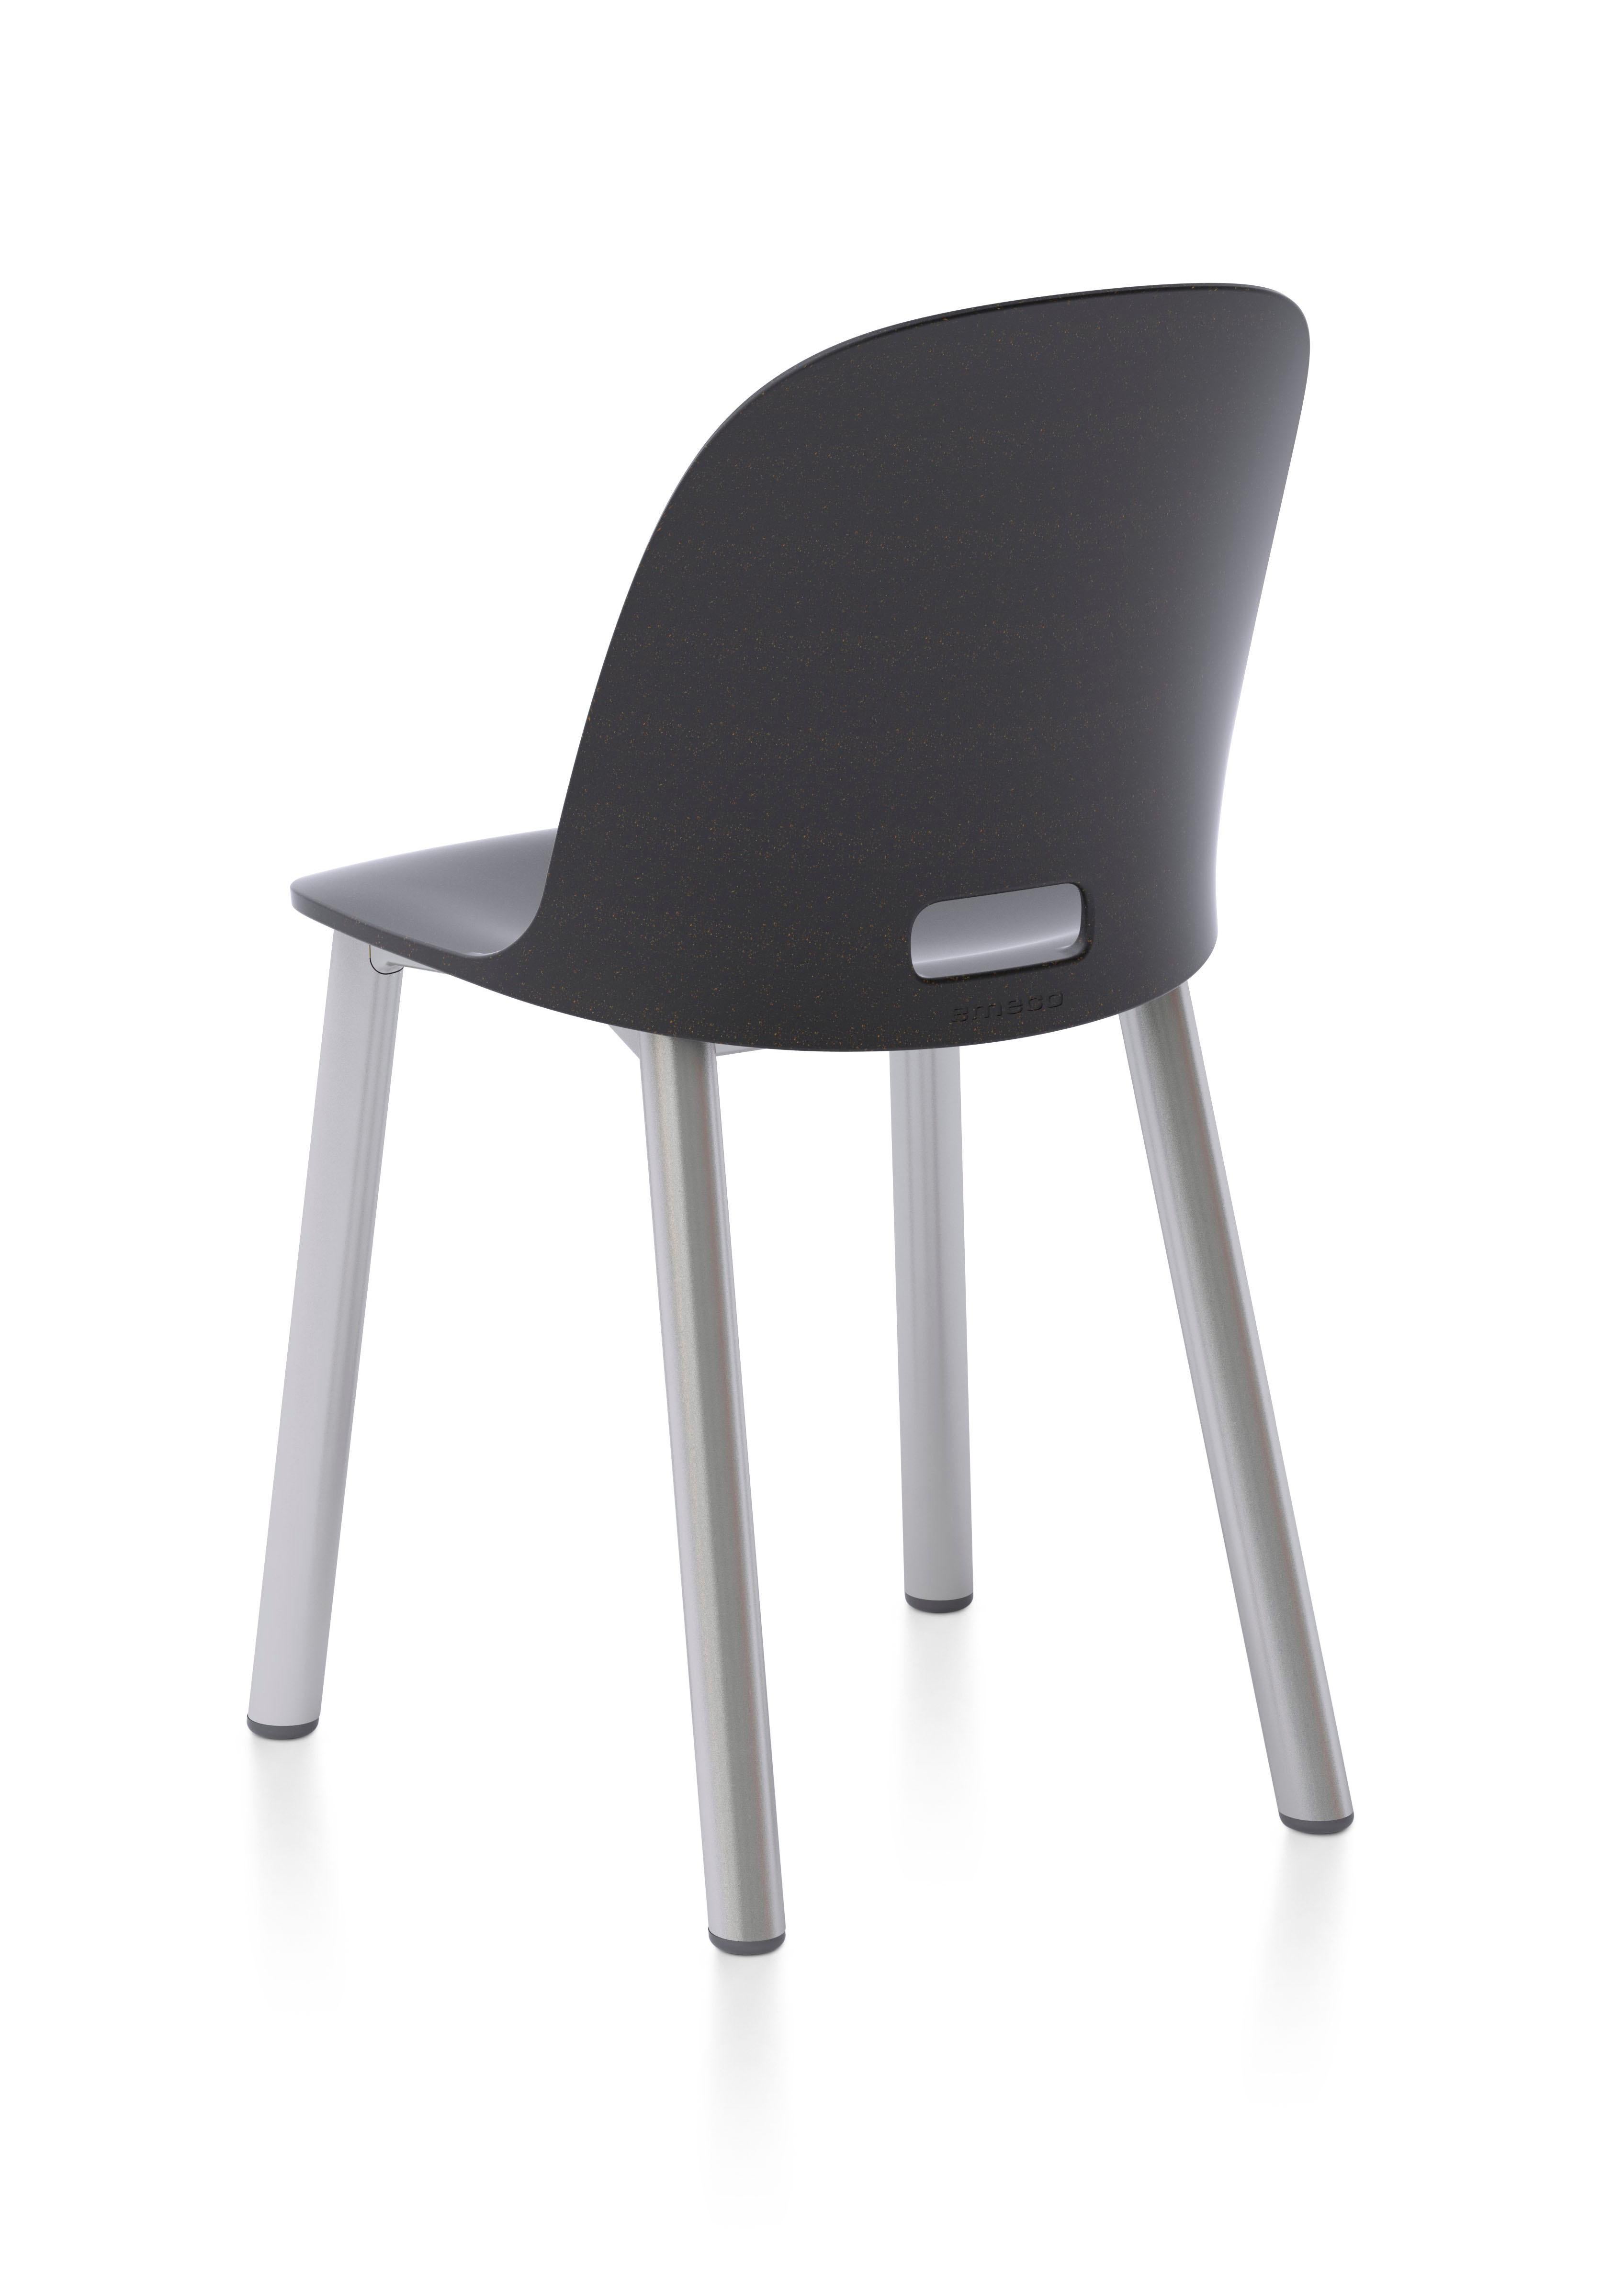 For Sale: Gray (Alfi Dark Grey) Emeco Alfi High Back Chair with Aluminum Frame by Jasper Morrison